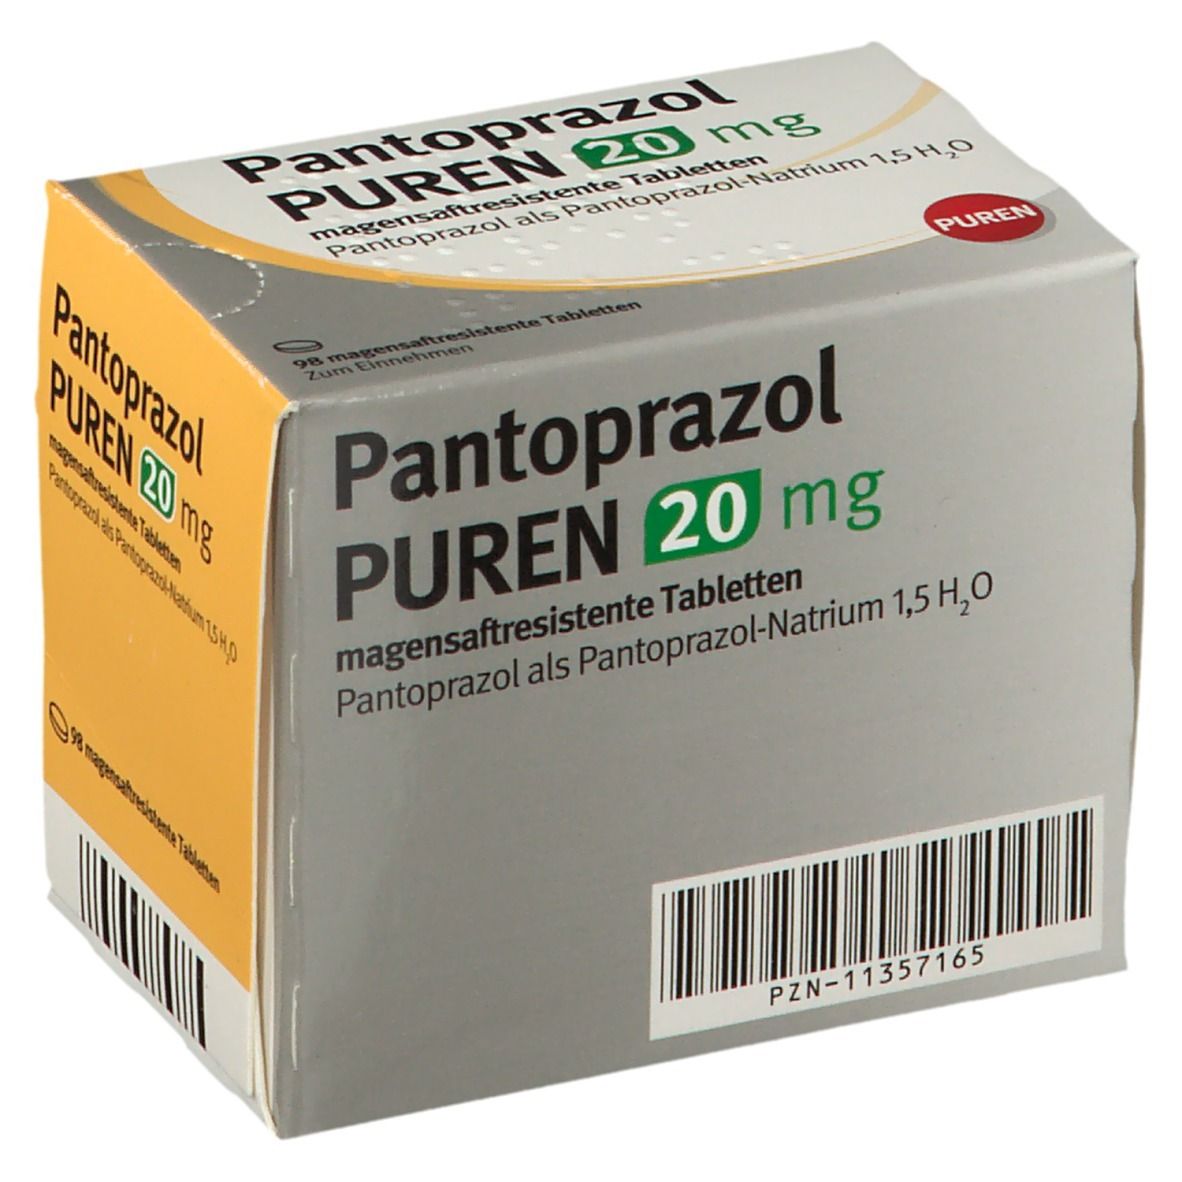 Pantoprazol PUREN 20 mg